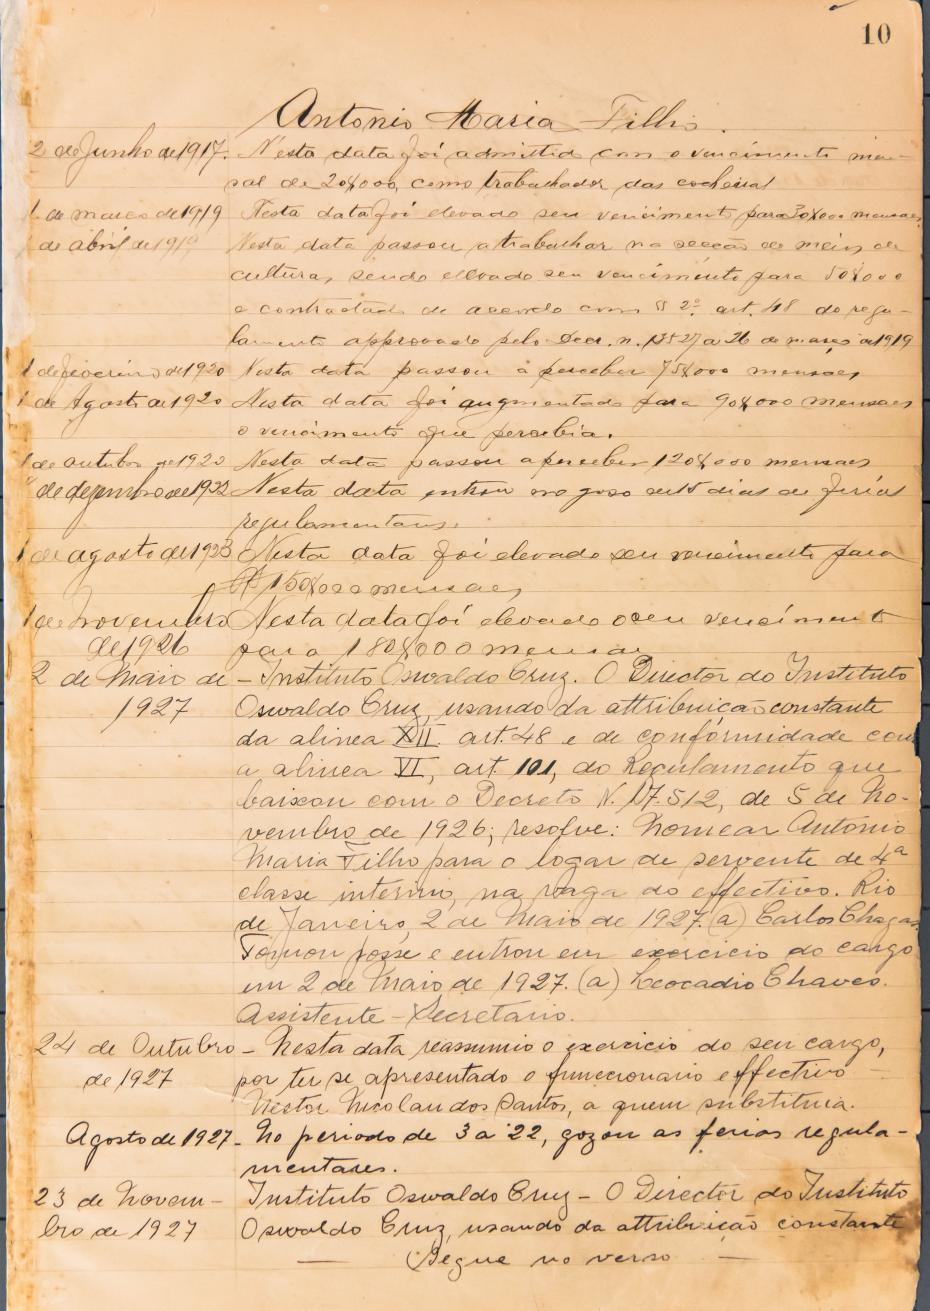 Ficha de registro funcional de Antonio Maria Filho. Documento manuscrito